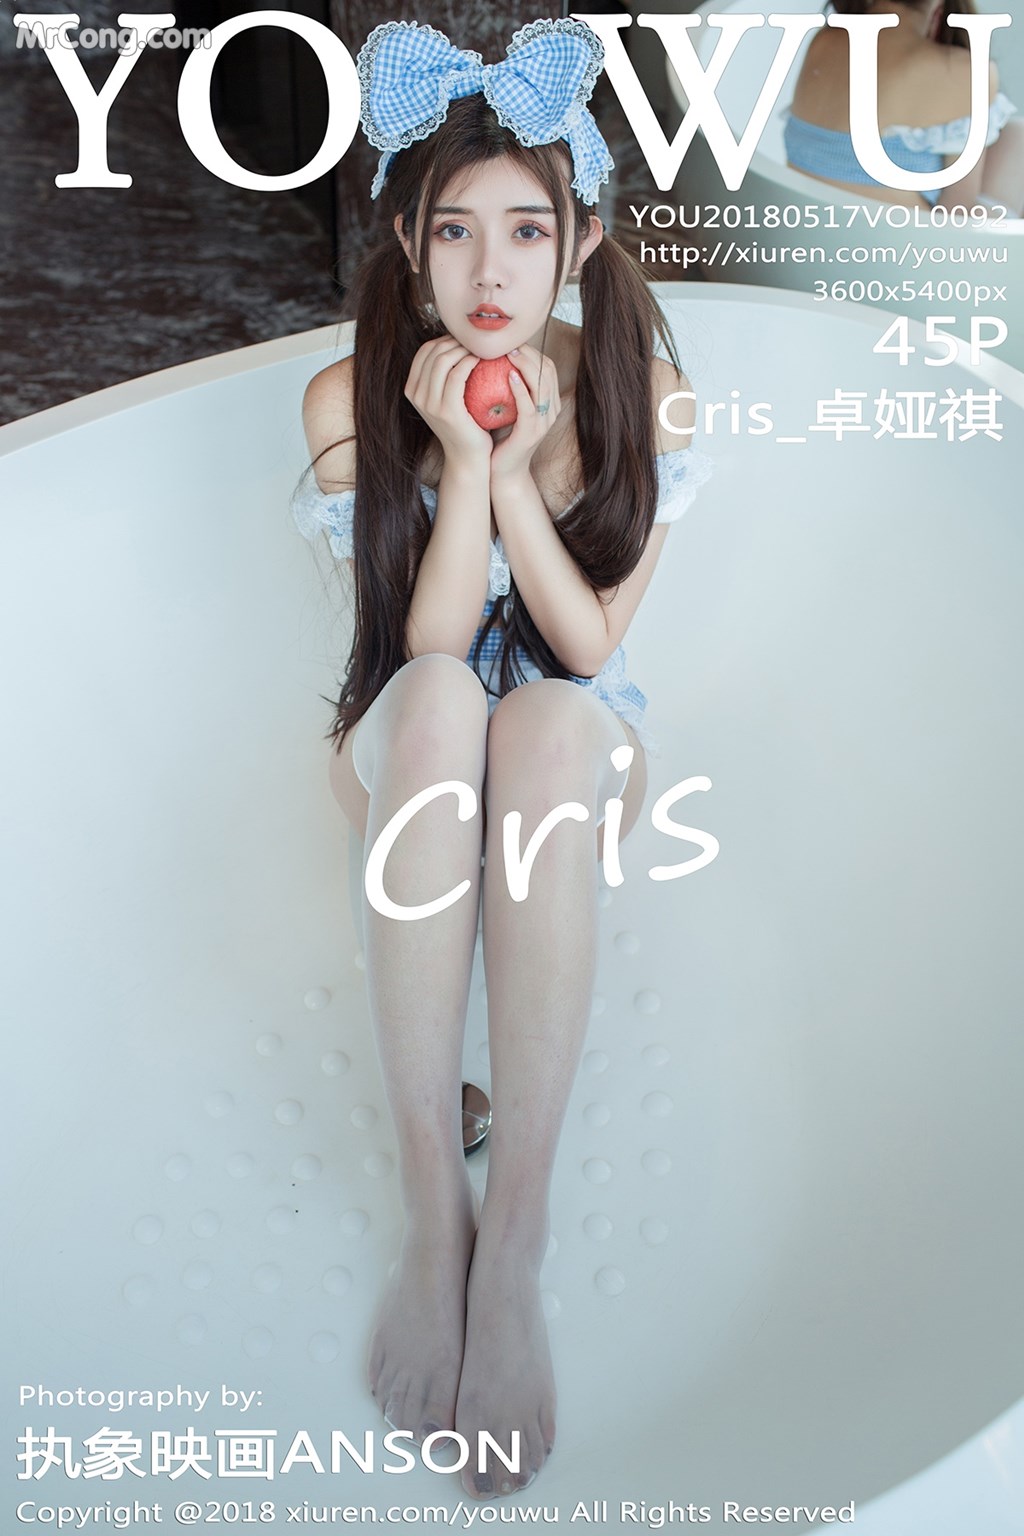 YouWu Vol.092: Model Cris_ 卓娅祺 (46 photos) photo 1-0